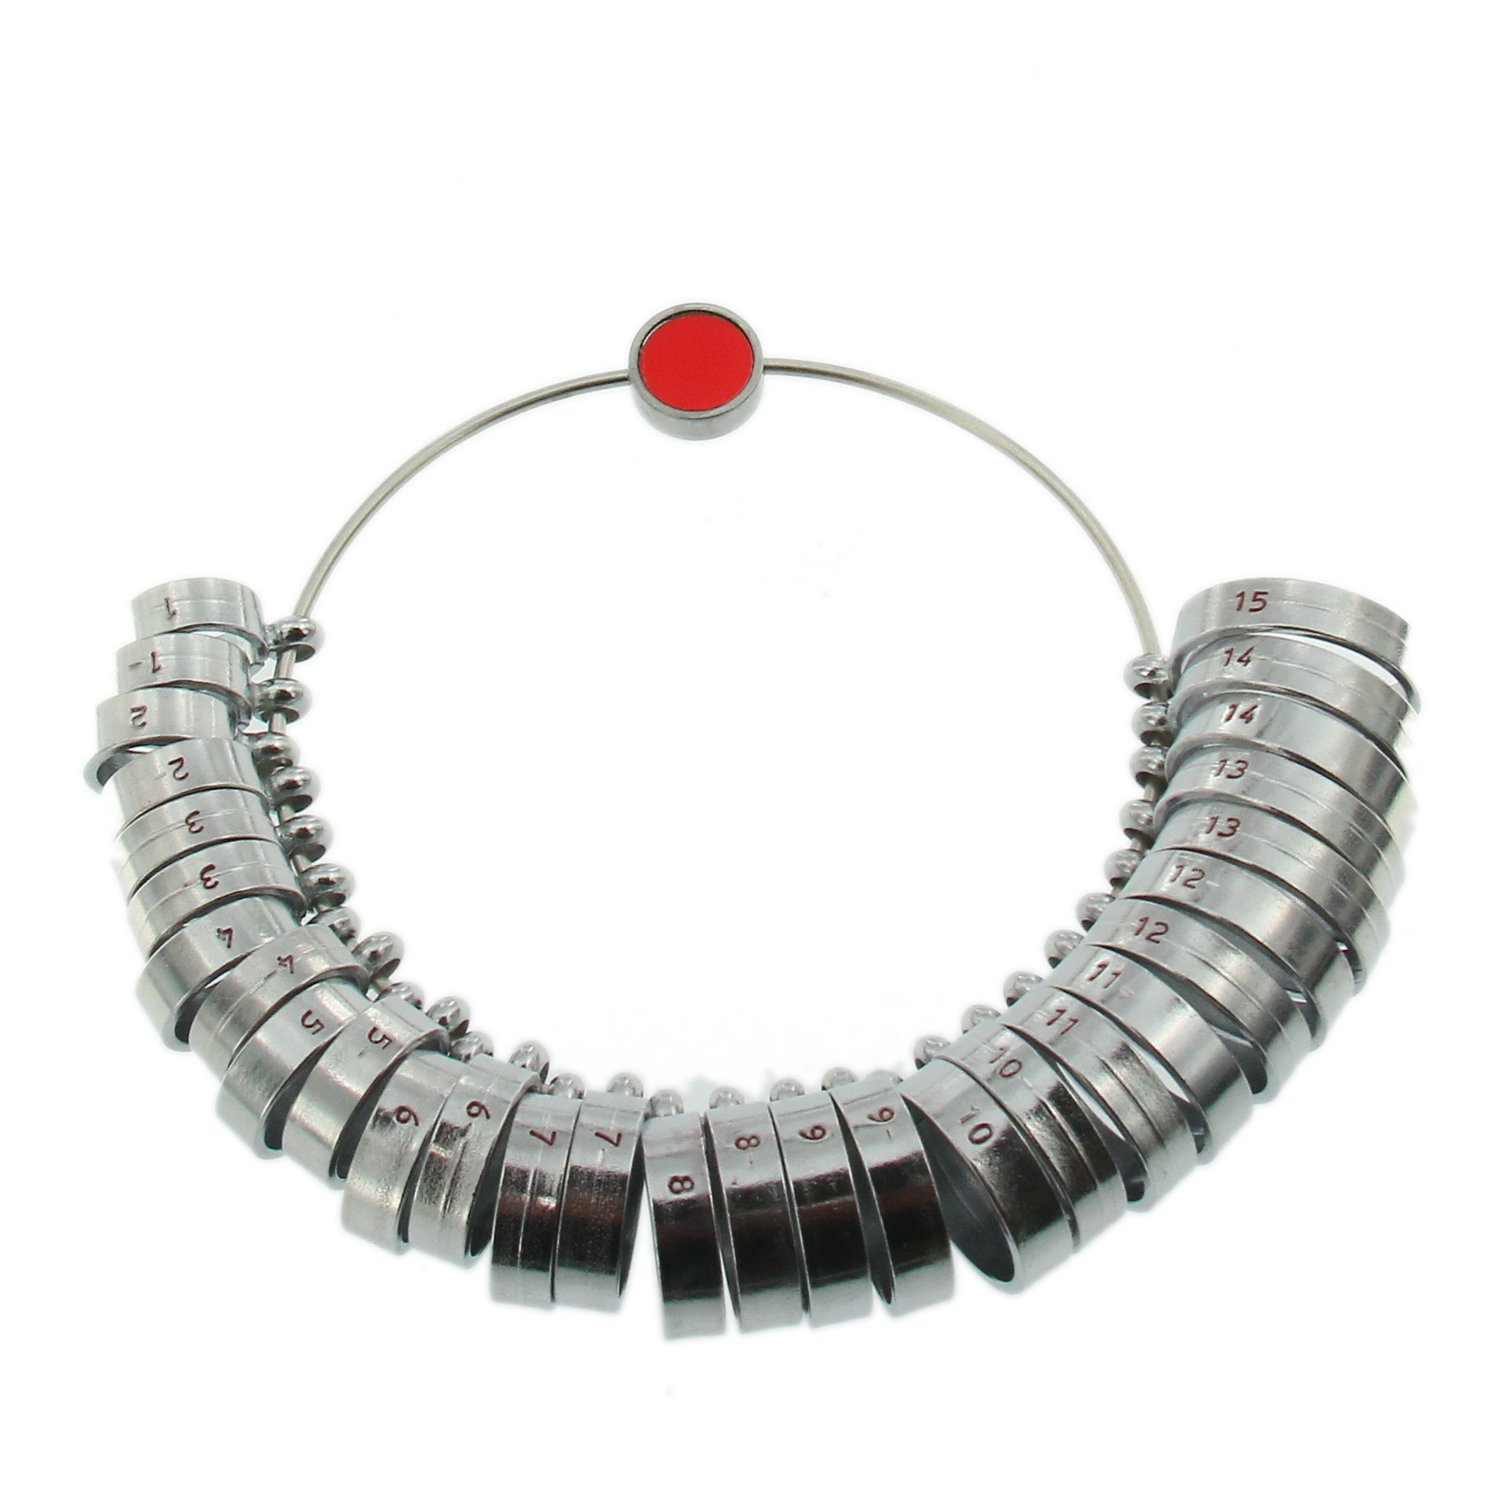 Plastic Bracelet Bangle Gauge Sizer Jewelry Measure Wrist Size